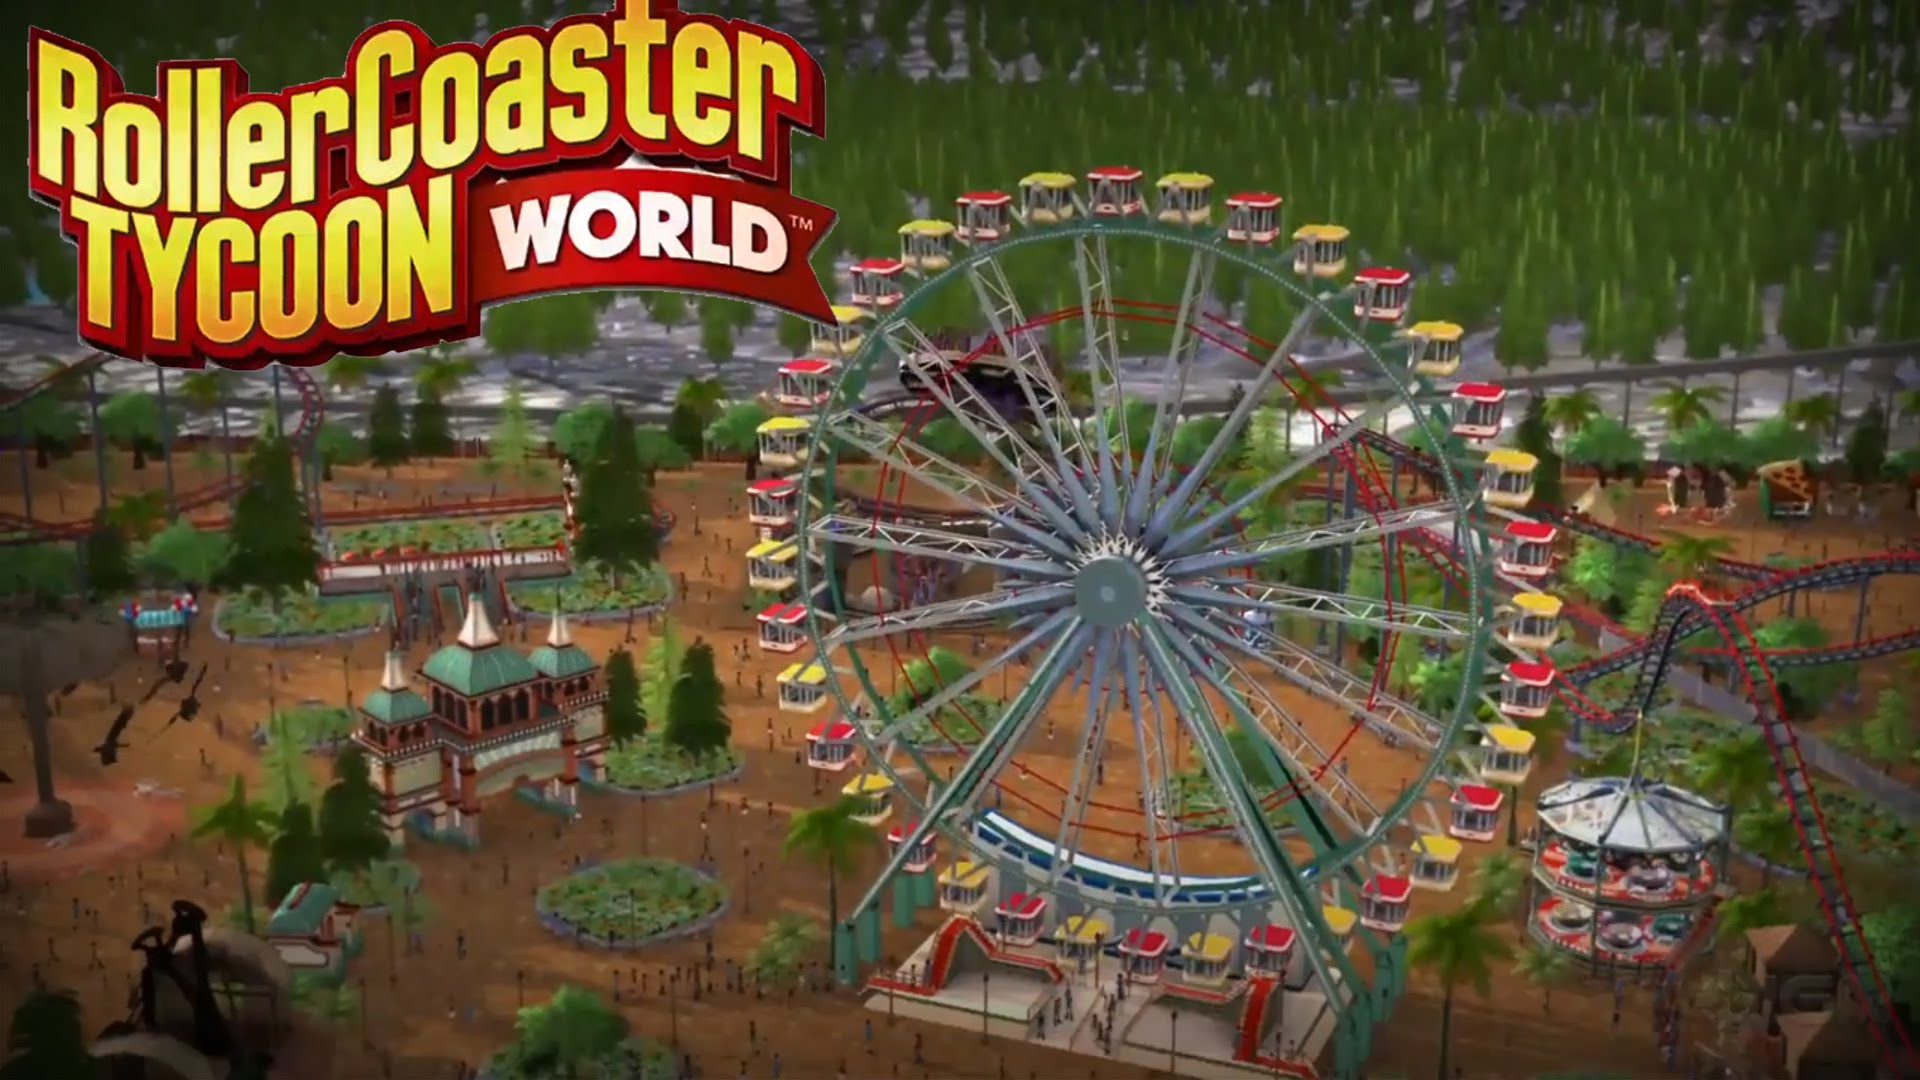 RollerCoaster Tycoon World